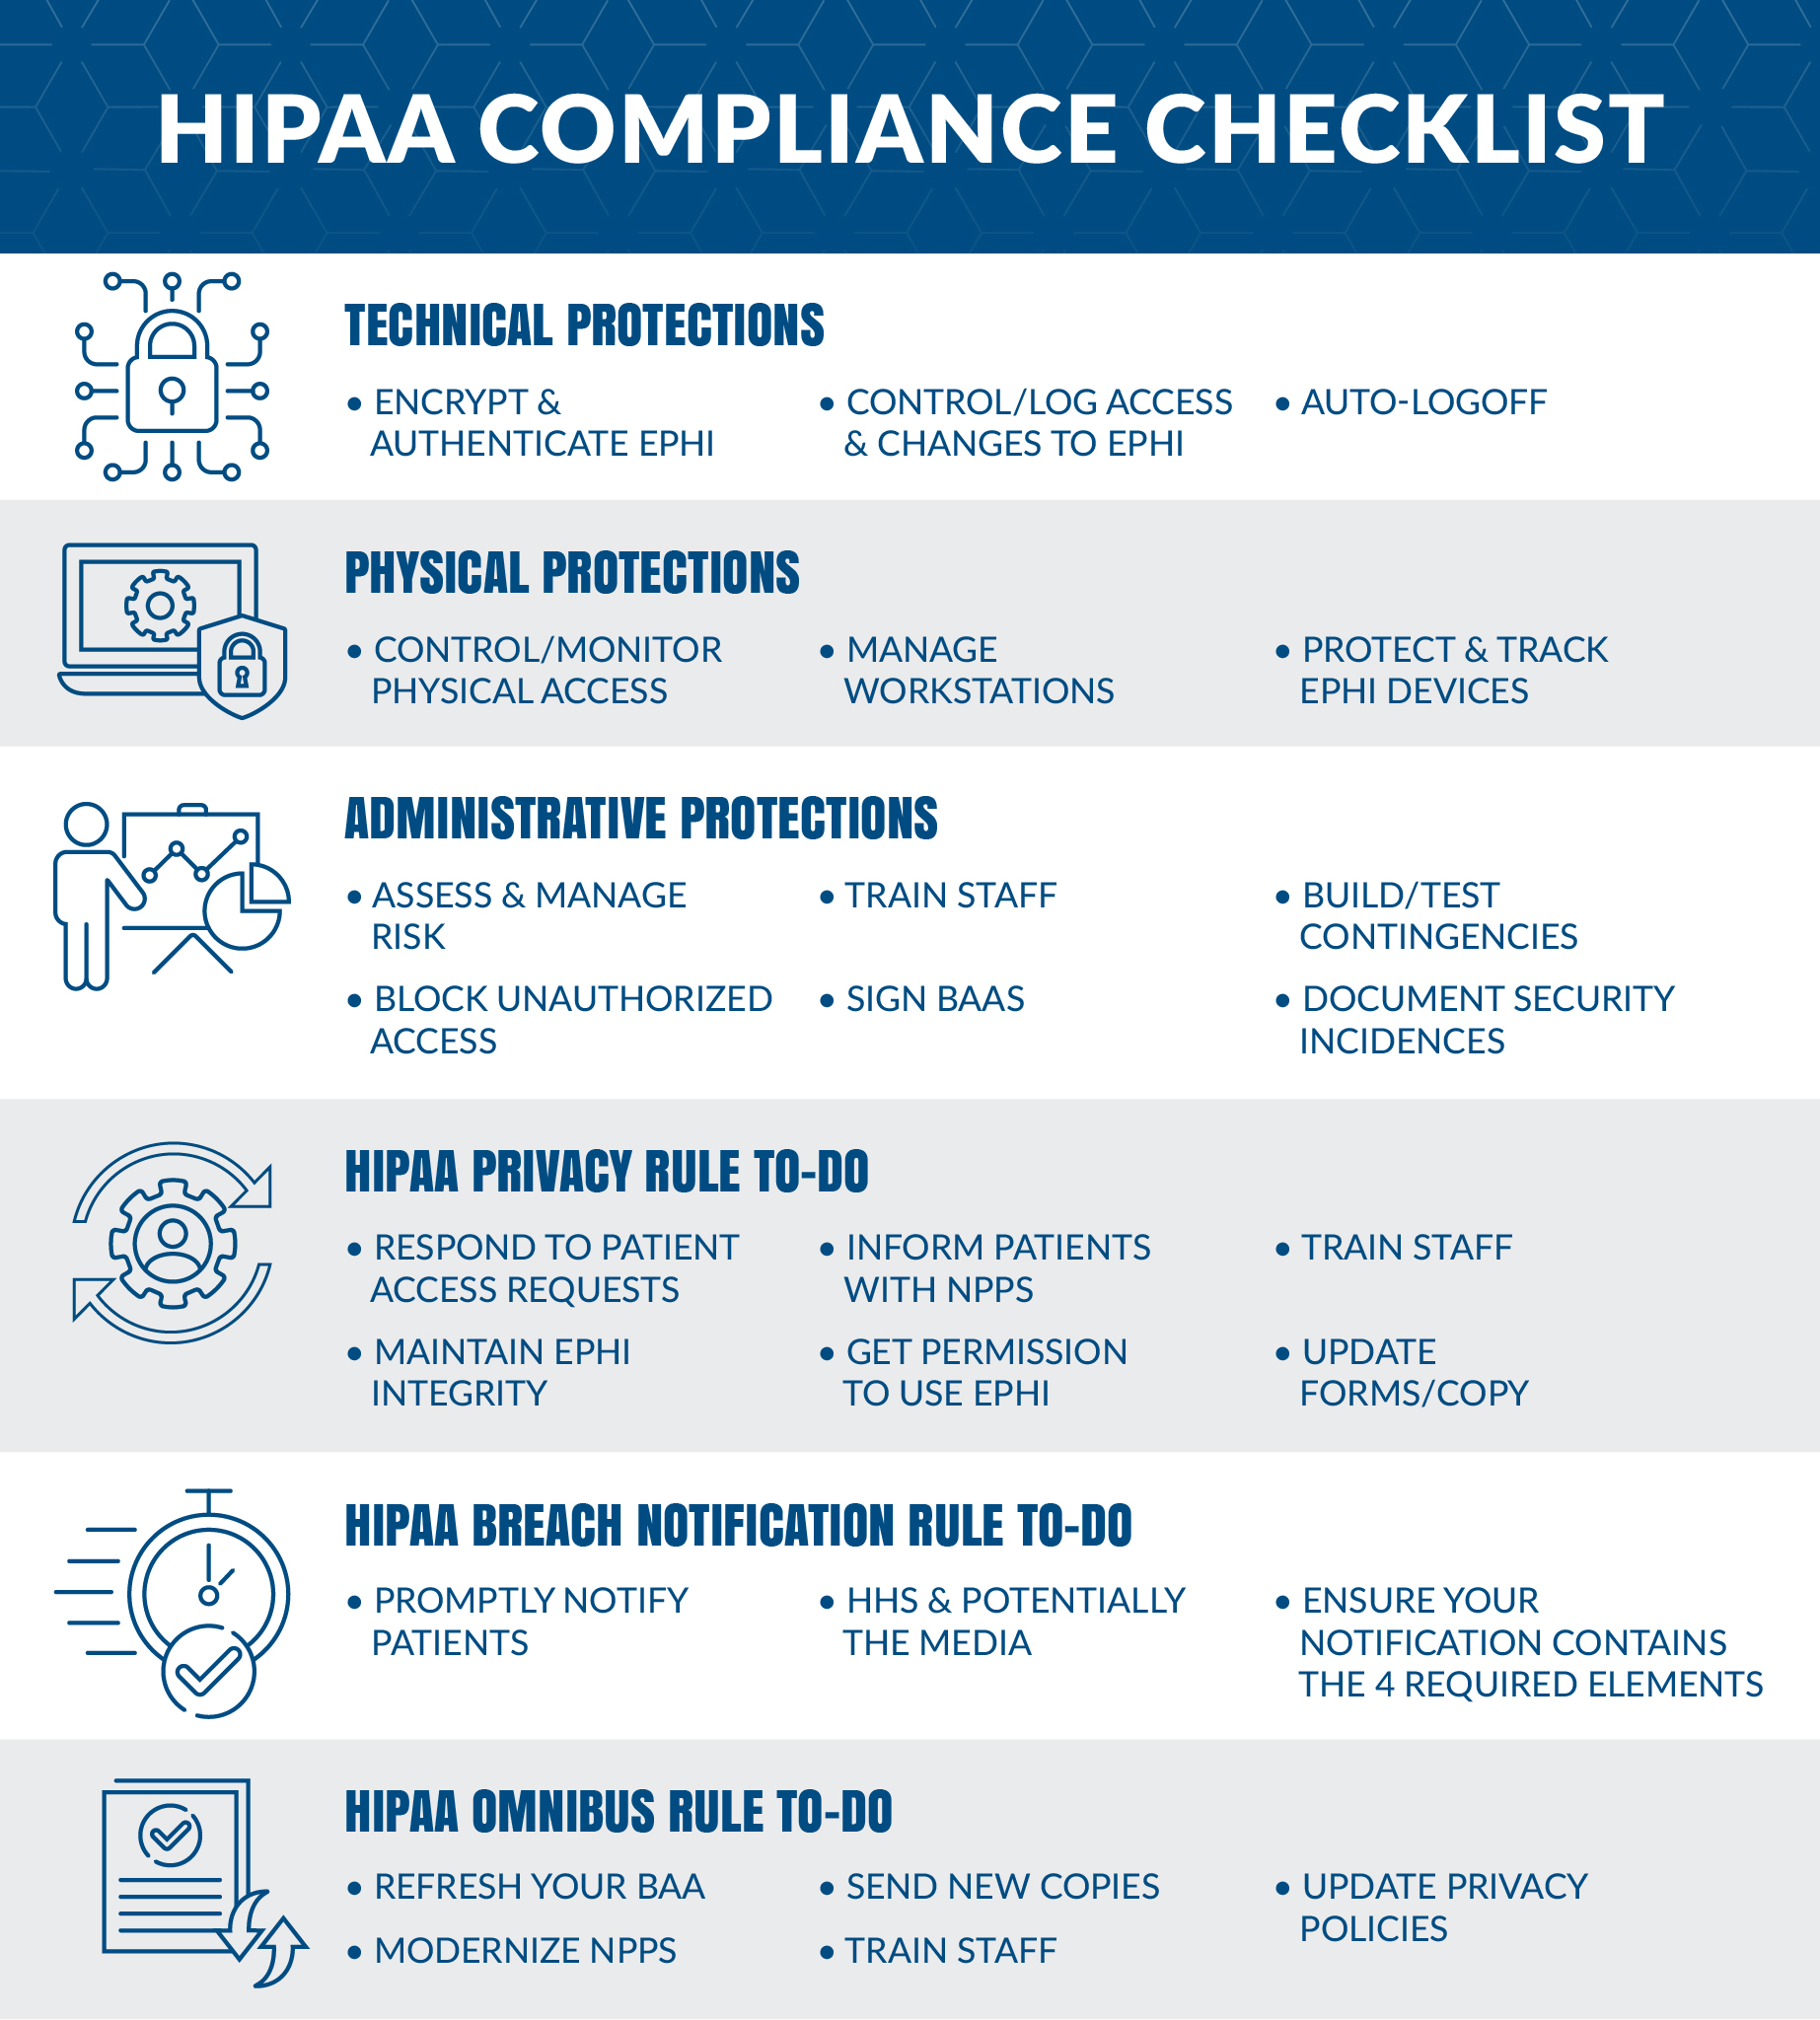 Hipaa Compliance Checklist Guide 2020 What Is Hipaa Compliance